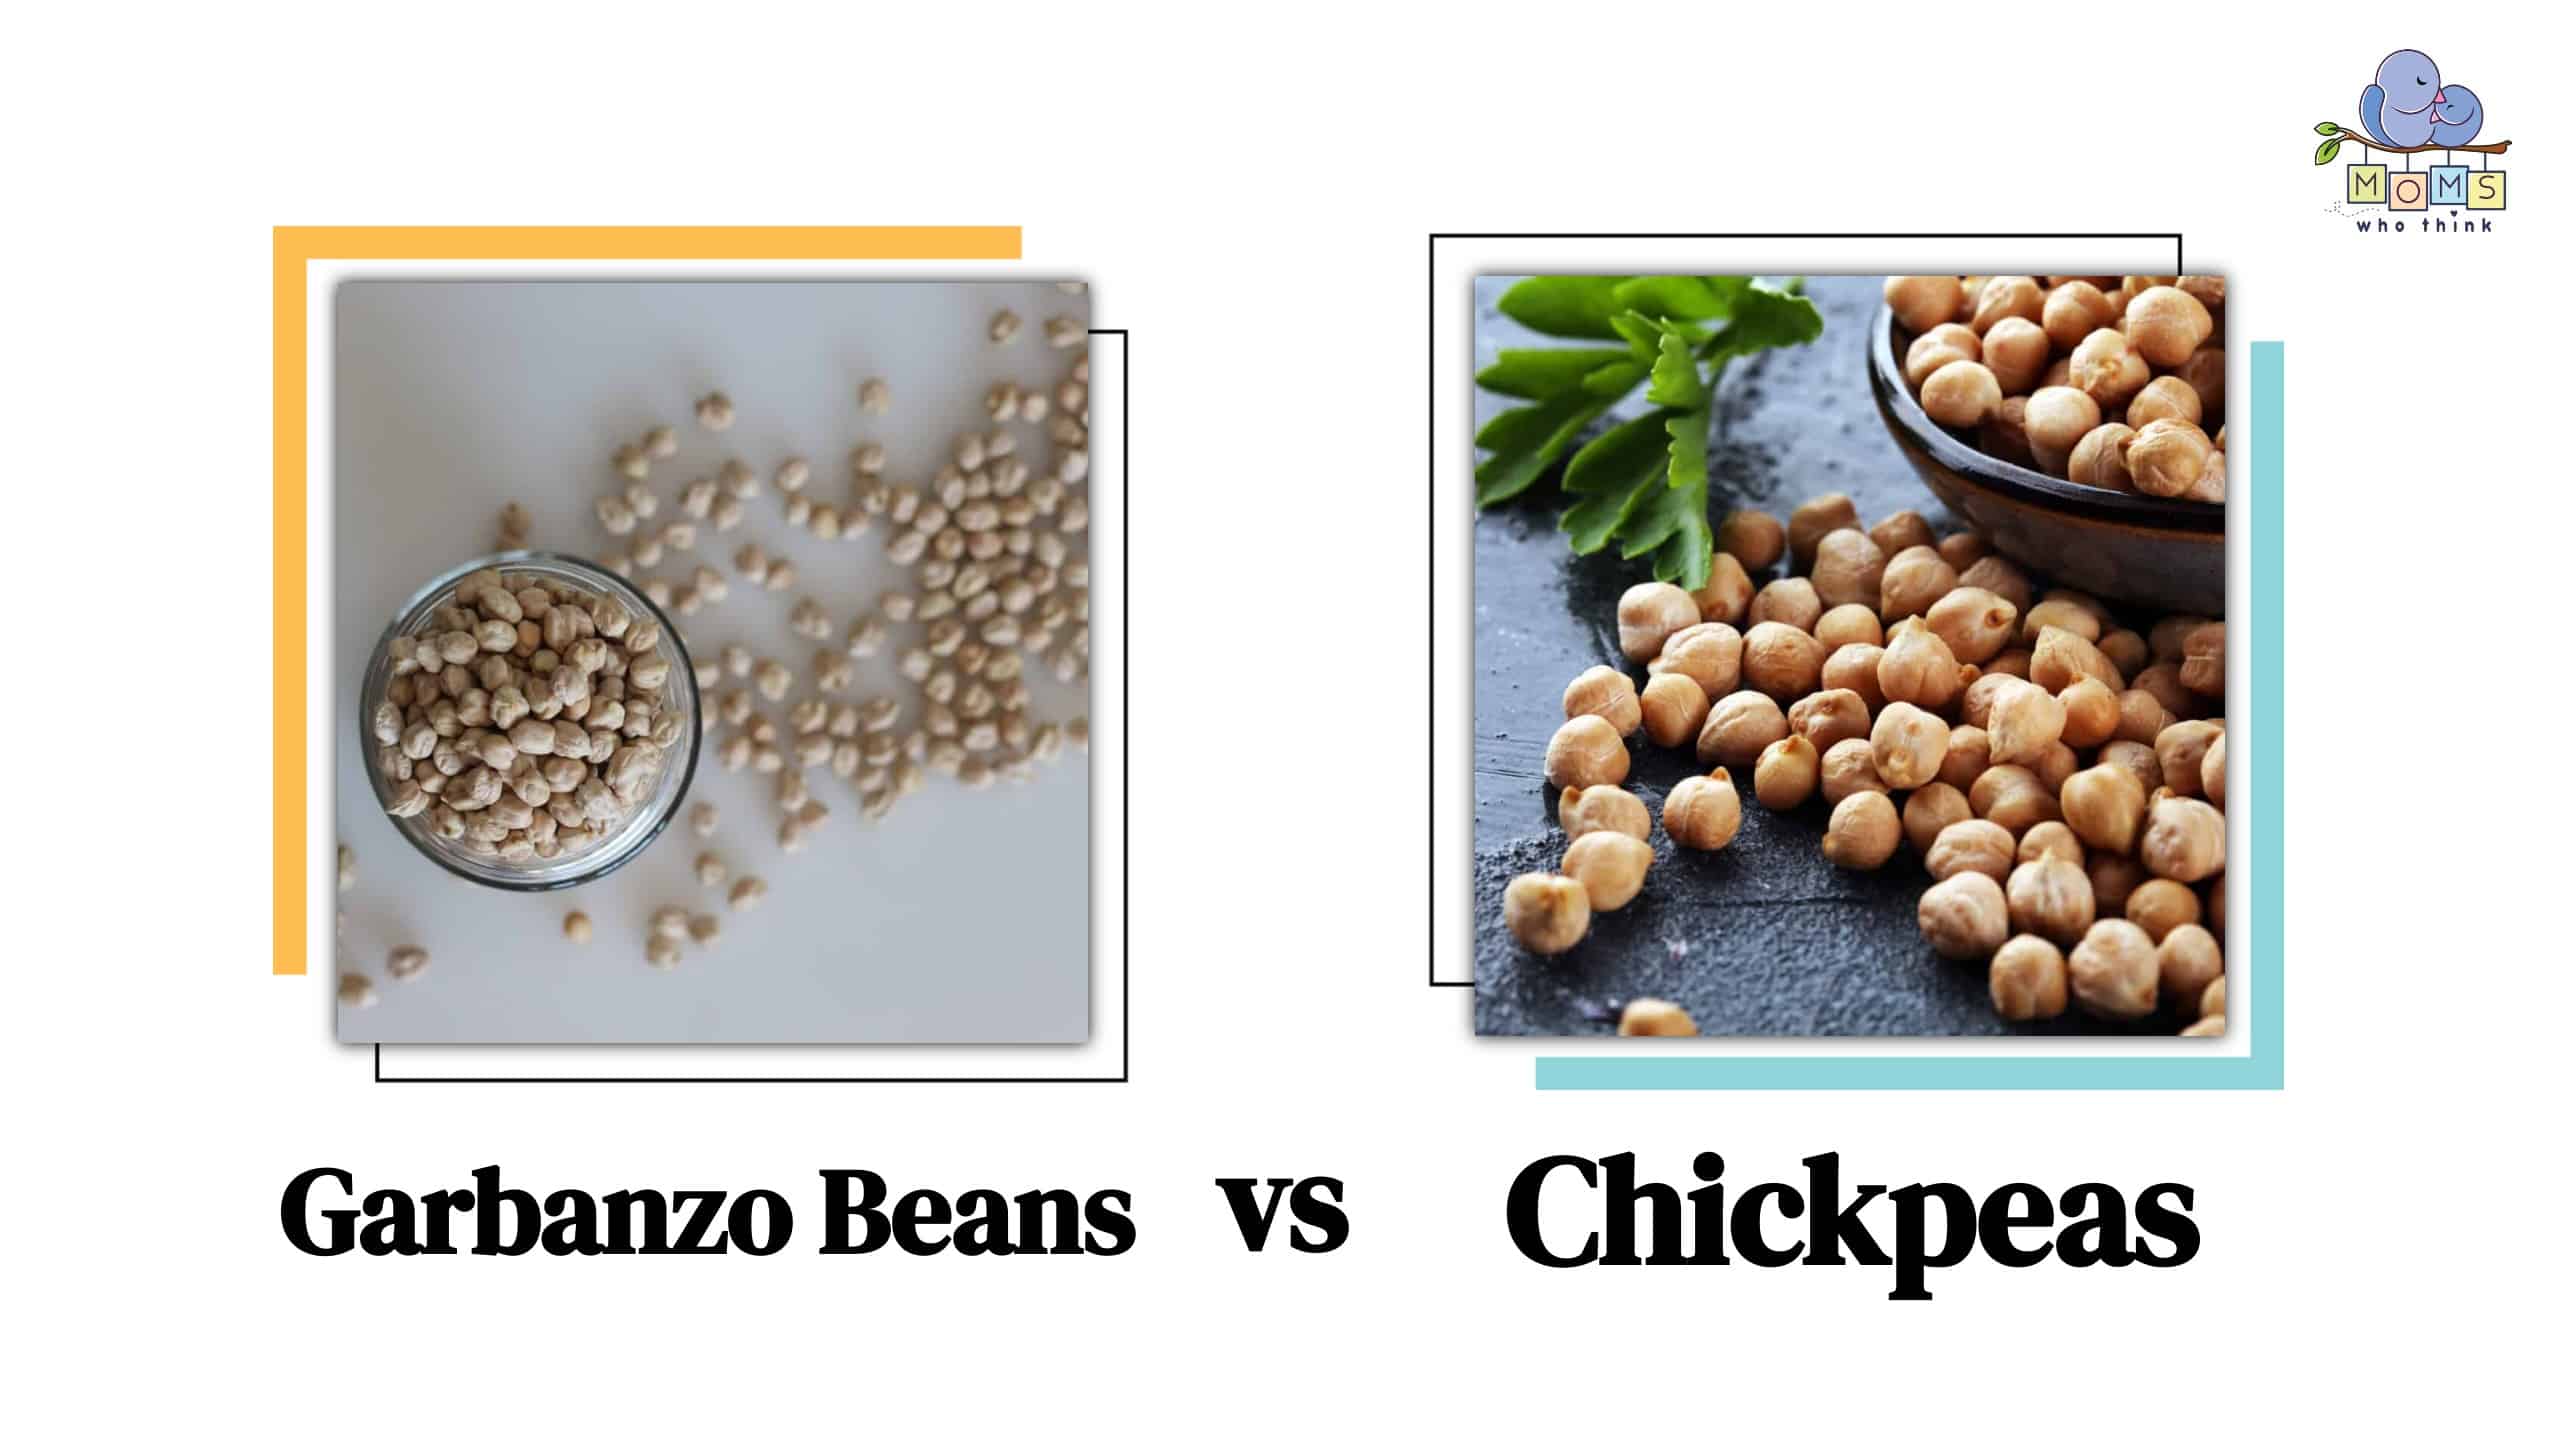 Garbanzo Beans vs Chickpeas